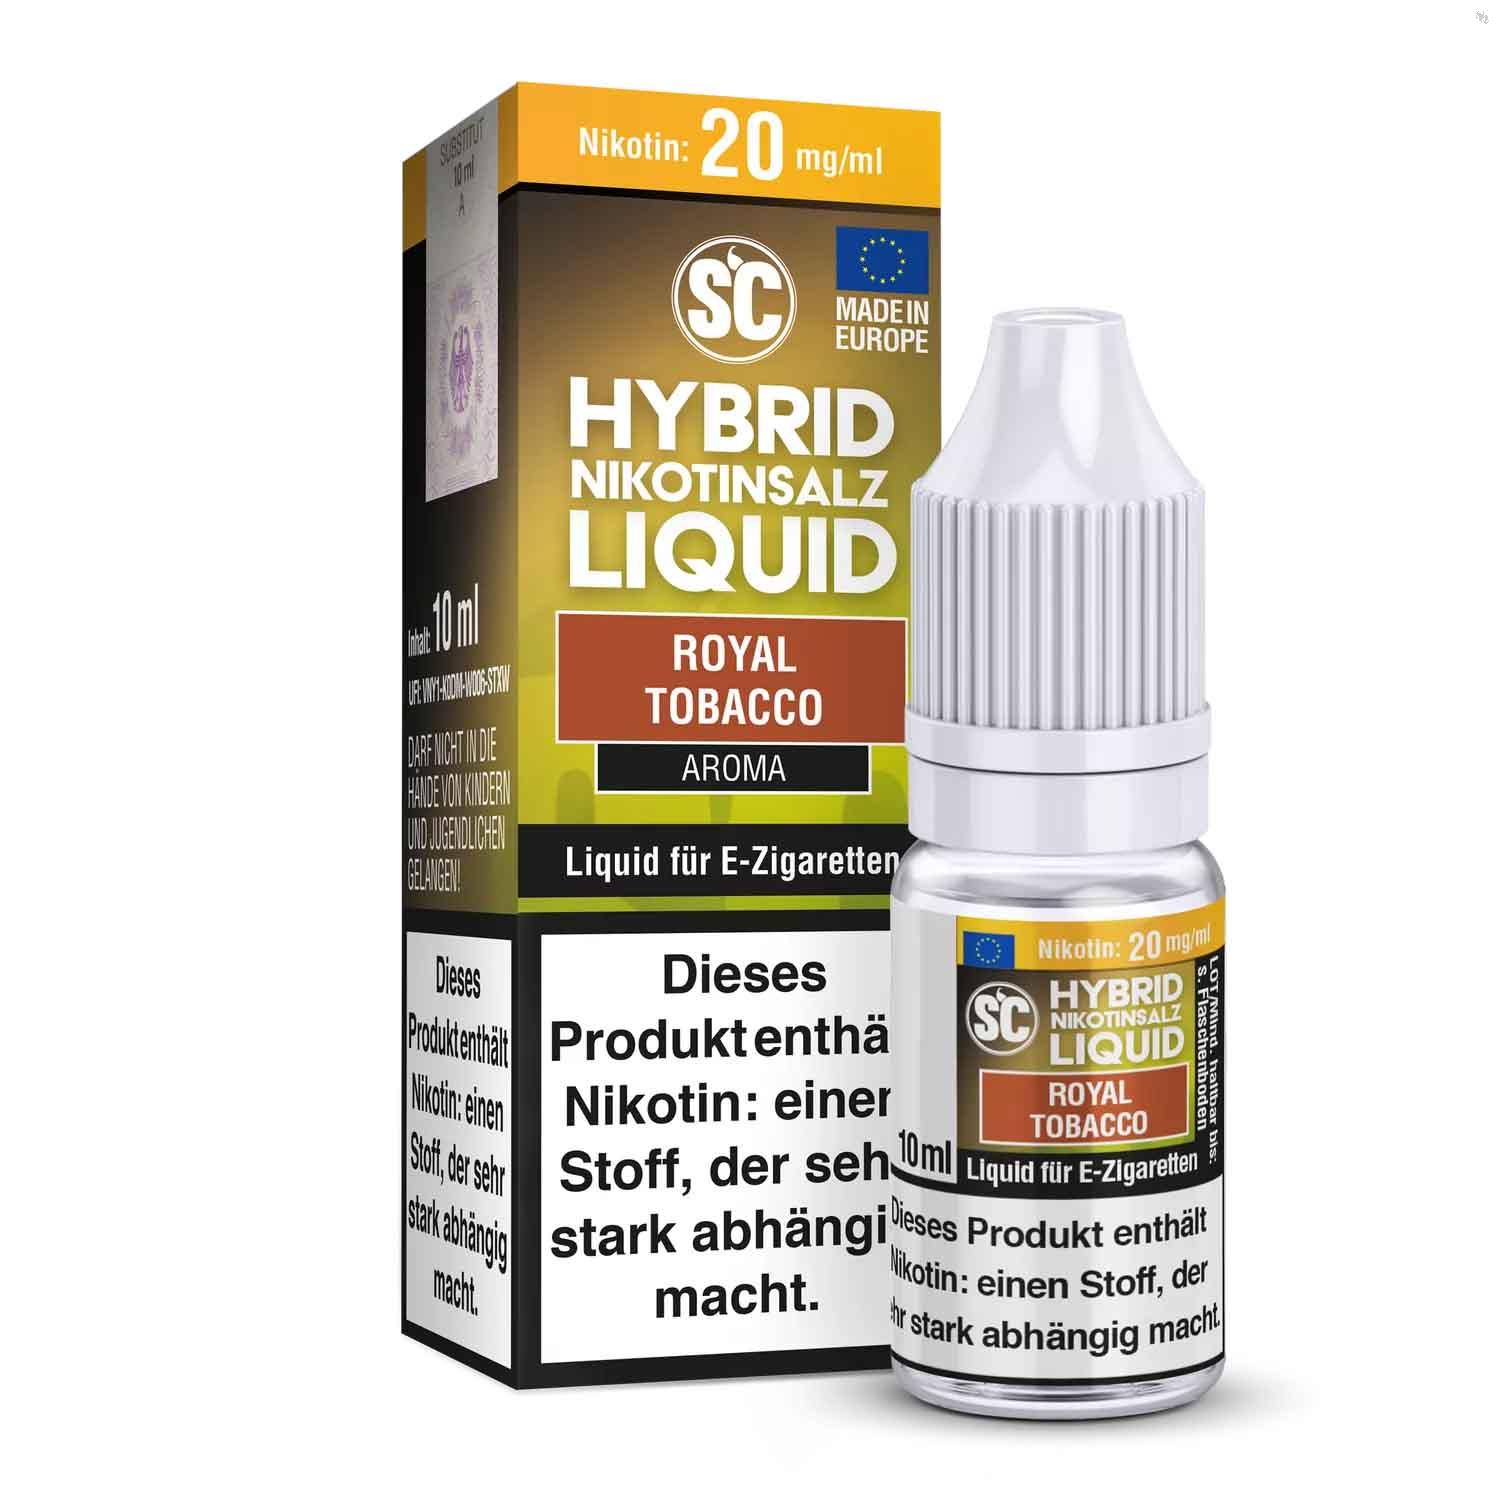 SC - Royal Tobacco Hybrid Nikotinsalz Liquid ✅ Günstig kaufen! 